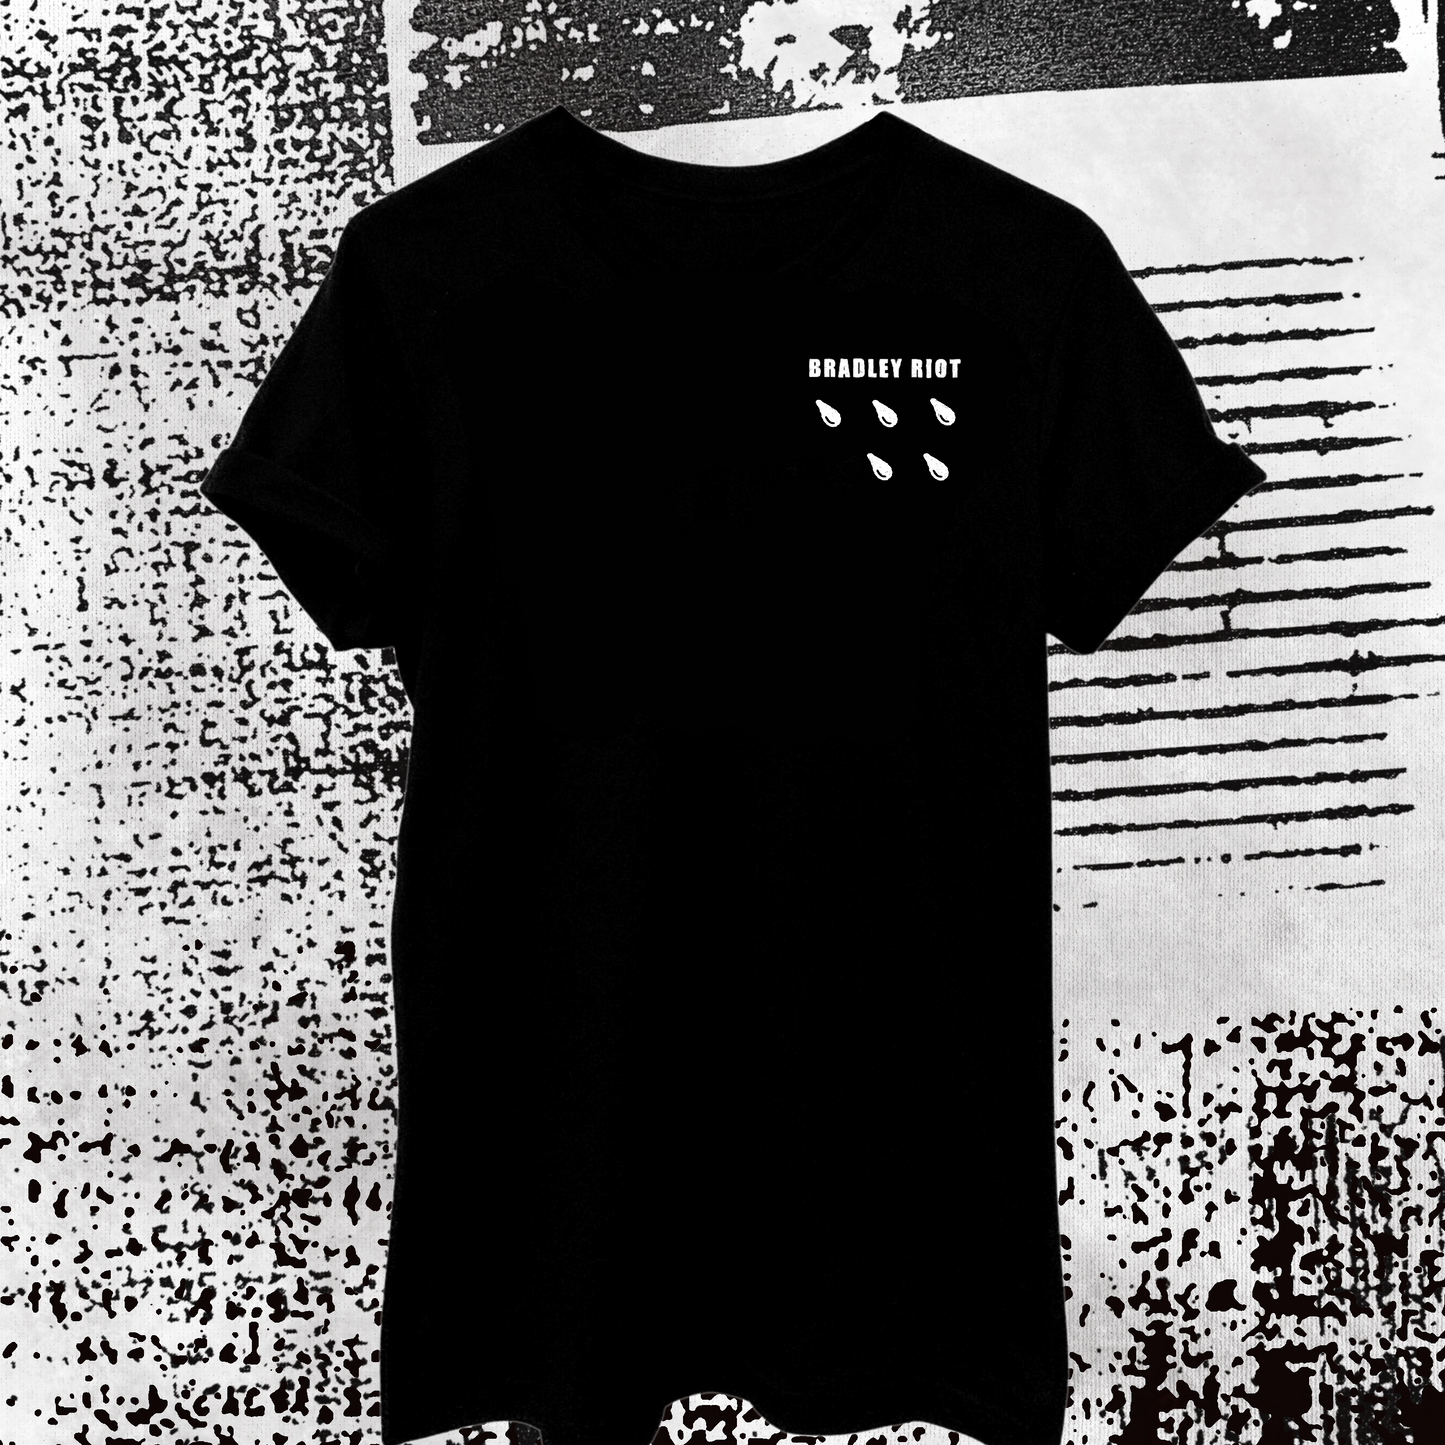 Bradley Riot - "Blood Pact" T-Shirt